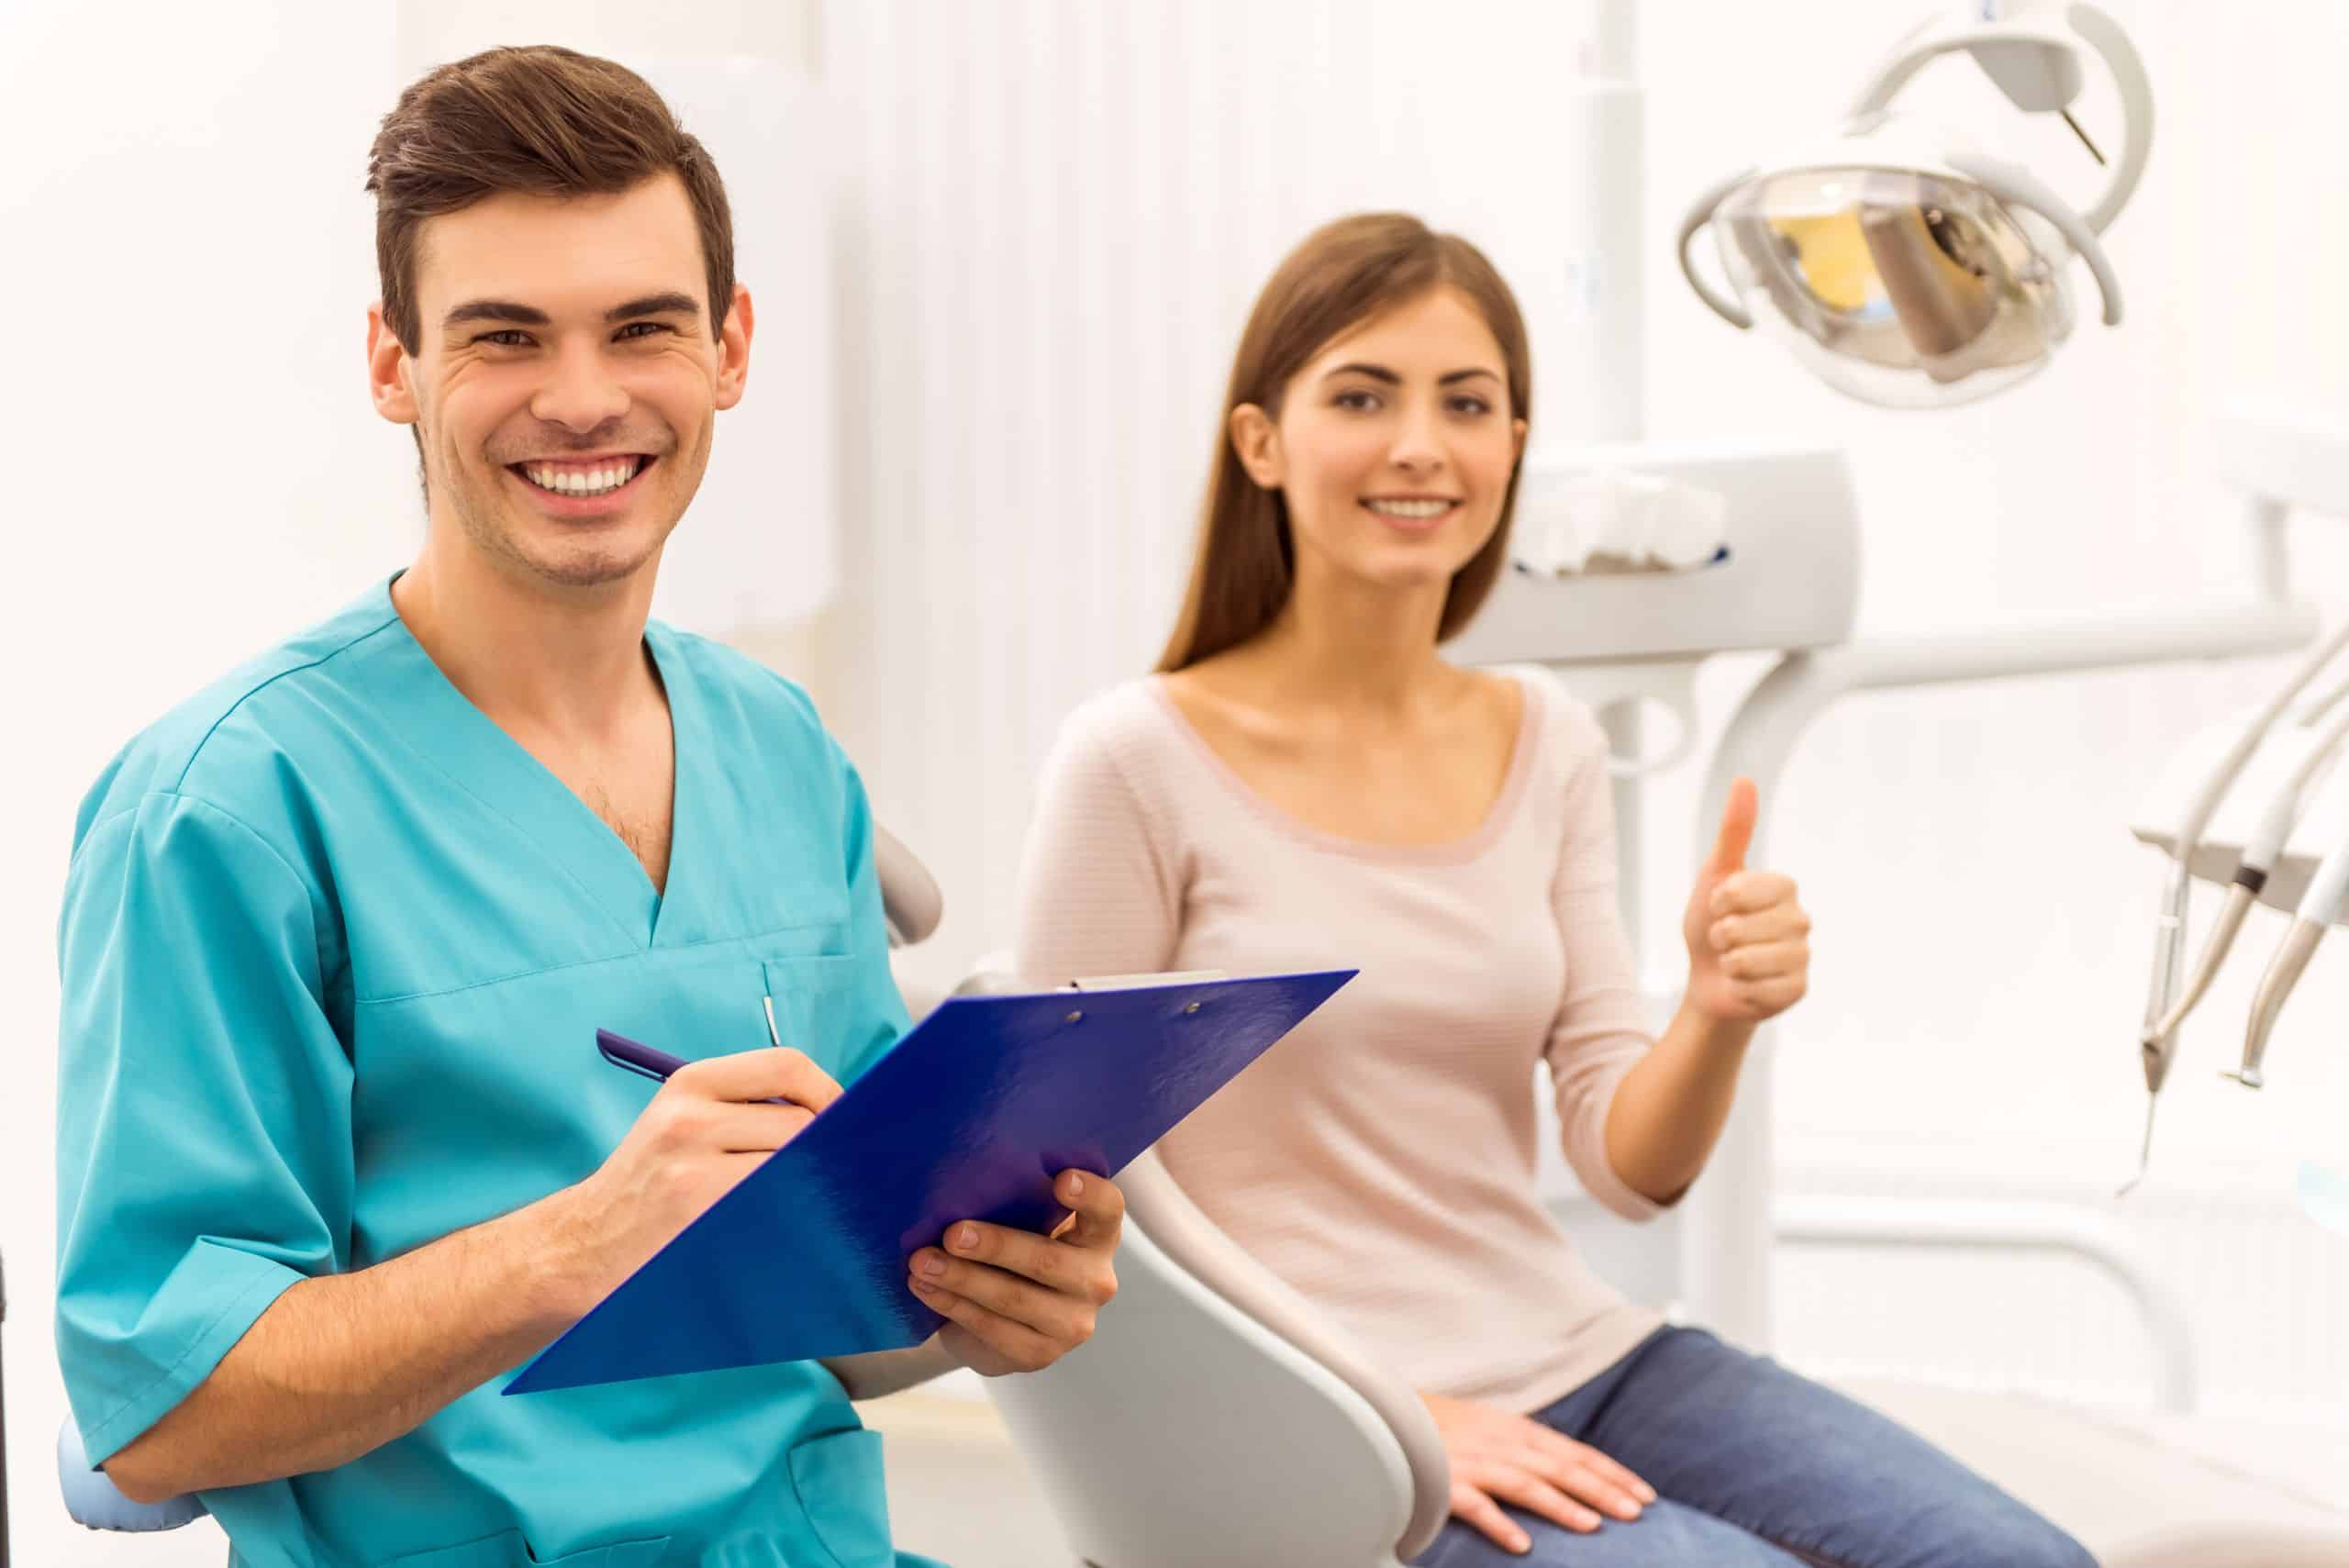 Professional dentist Preventative Care to patient